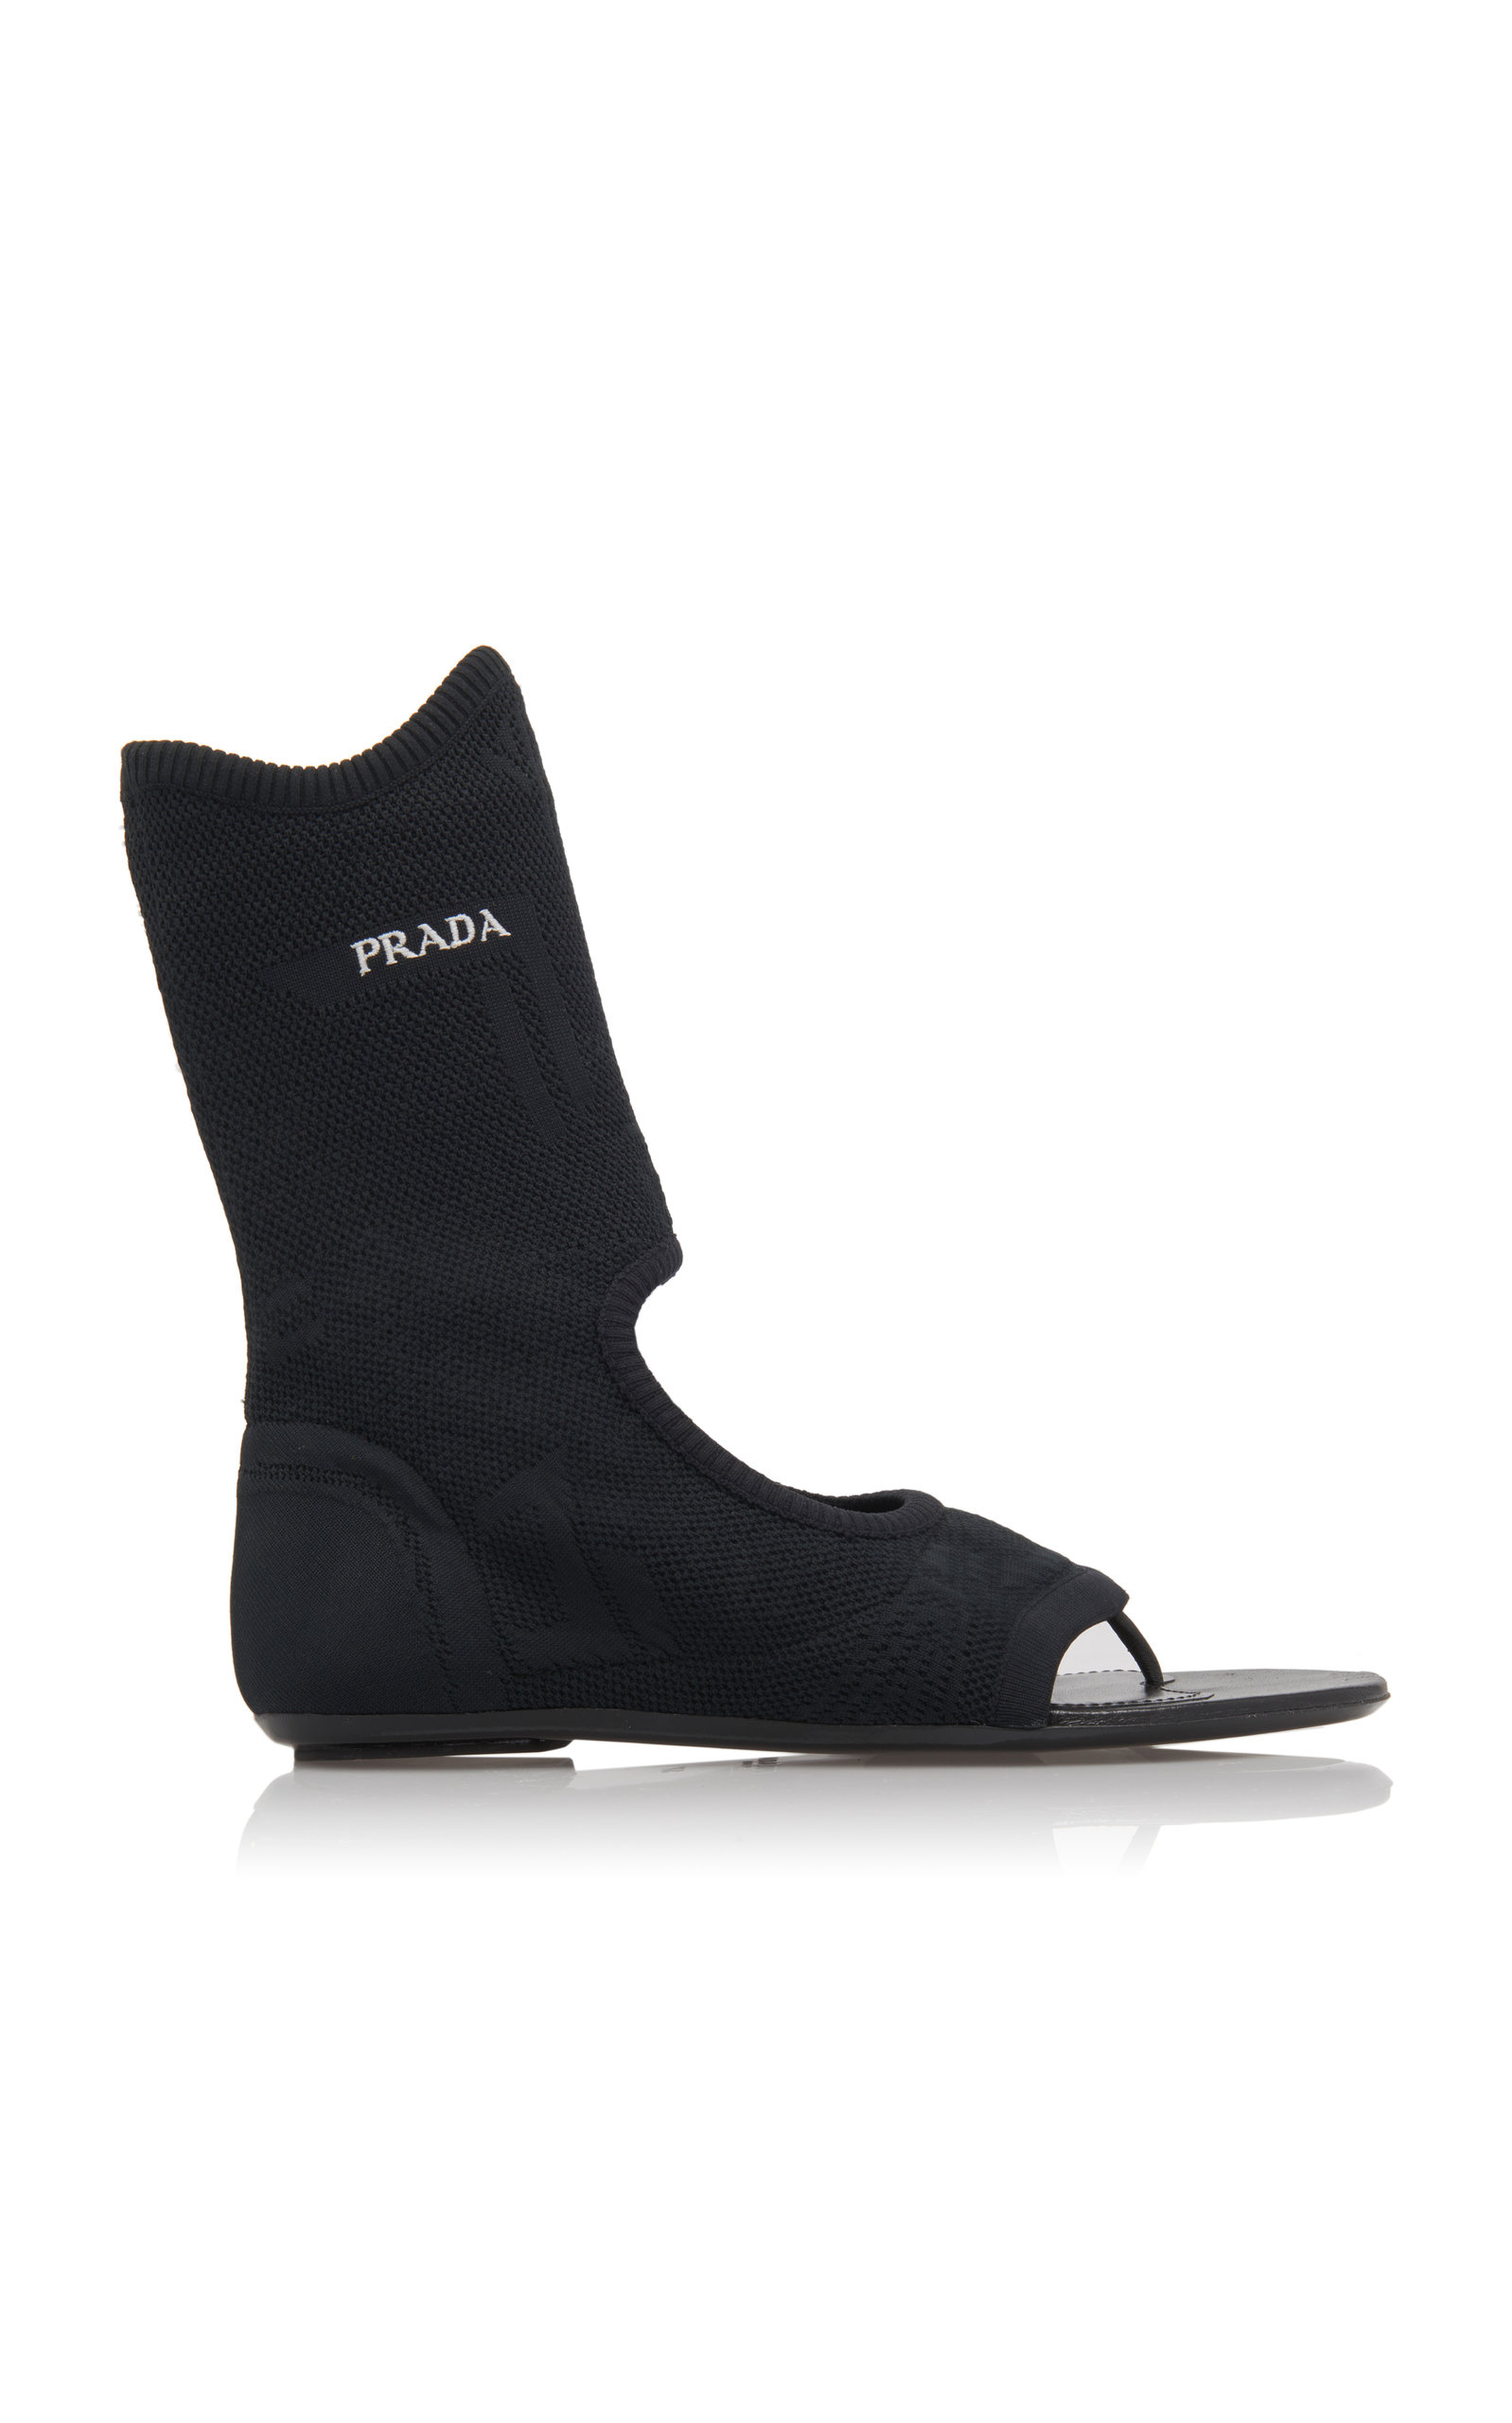 Prada - Women's Knitted Flat Sandals - Black/pink - Moda Operandi